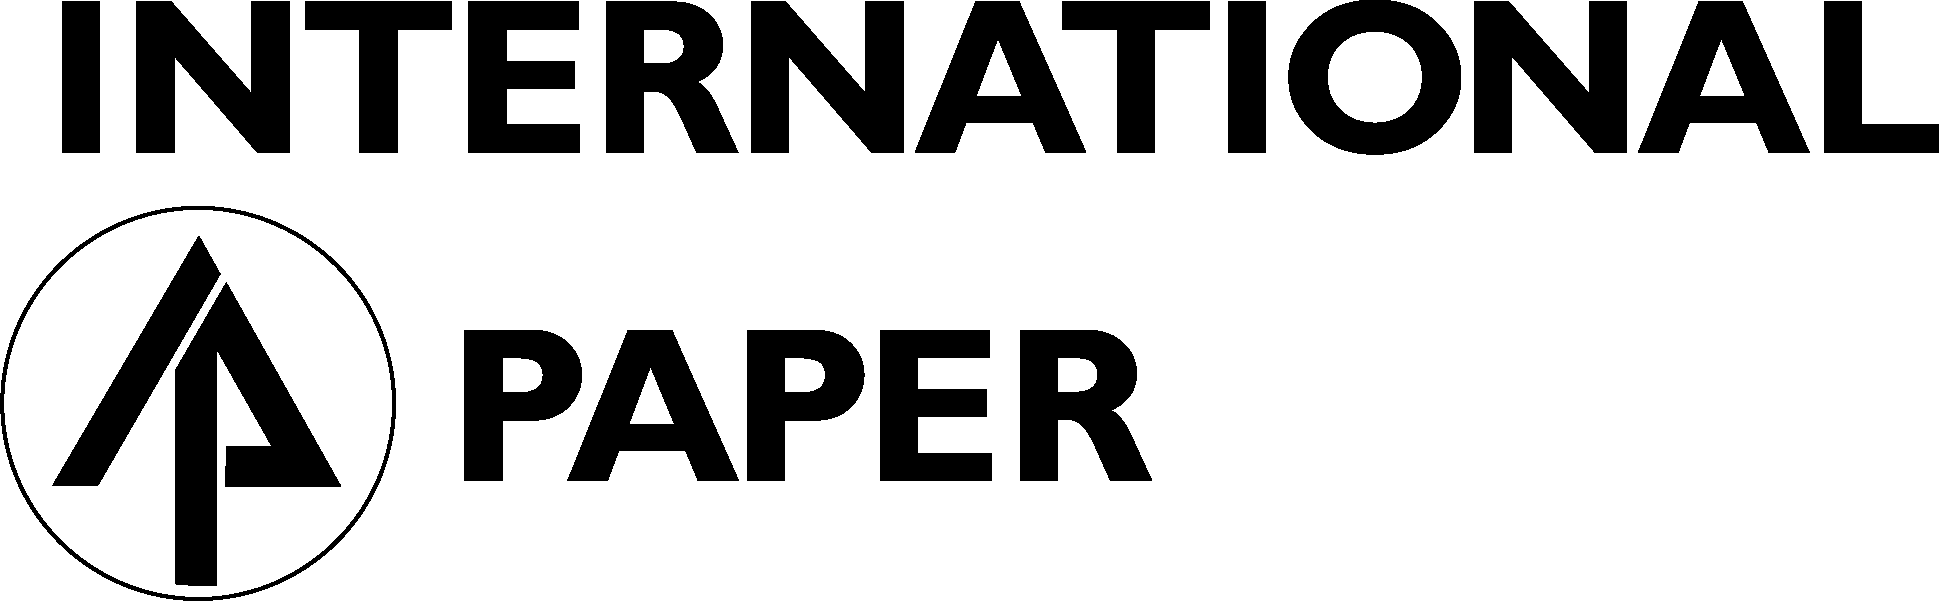 International Paper Logo png